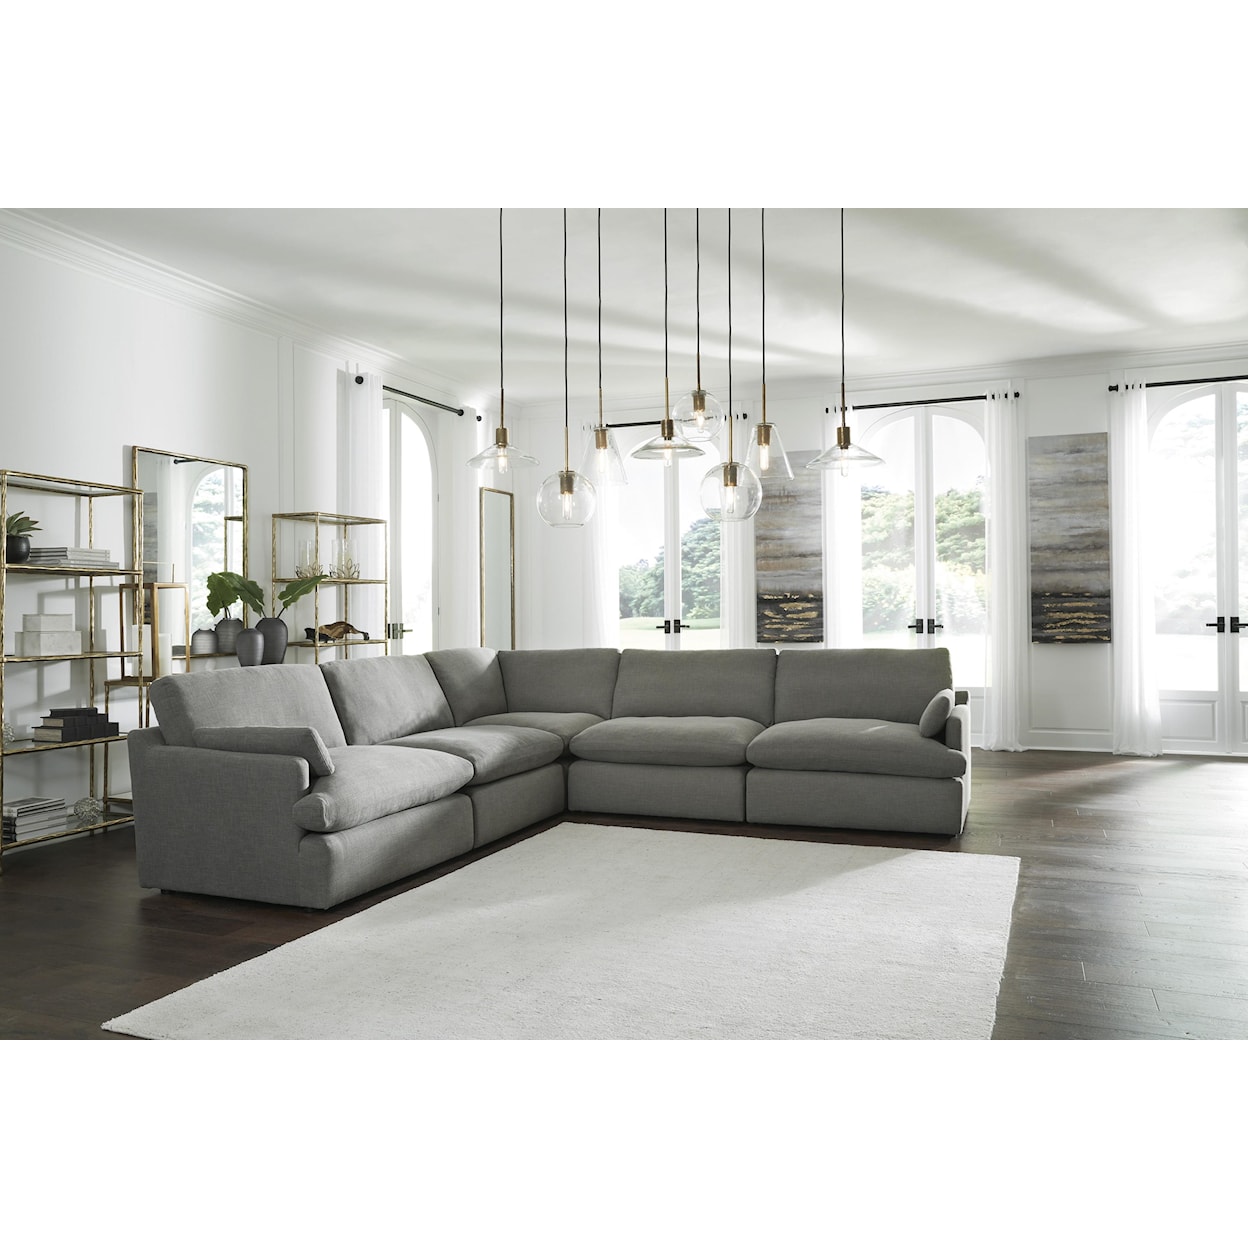 Ashley Furniture Tanavi 5 Piece Sectional Sofa